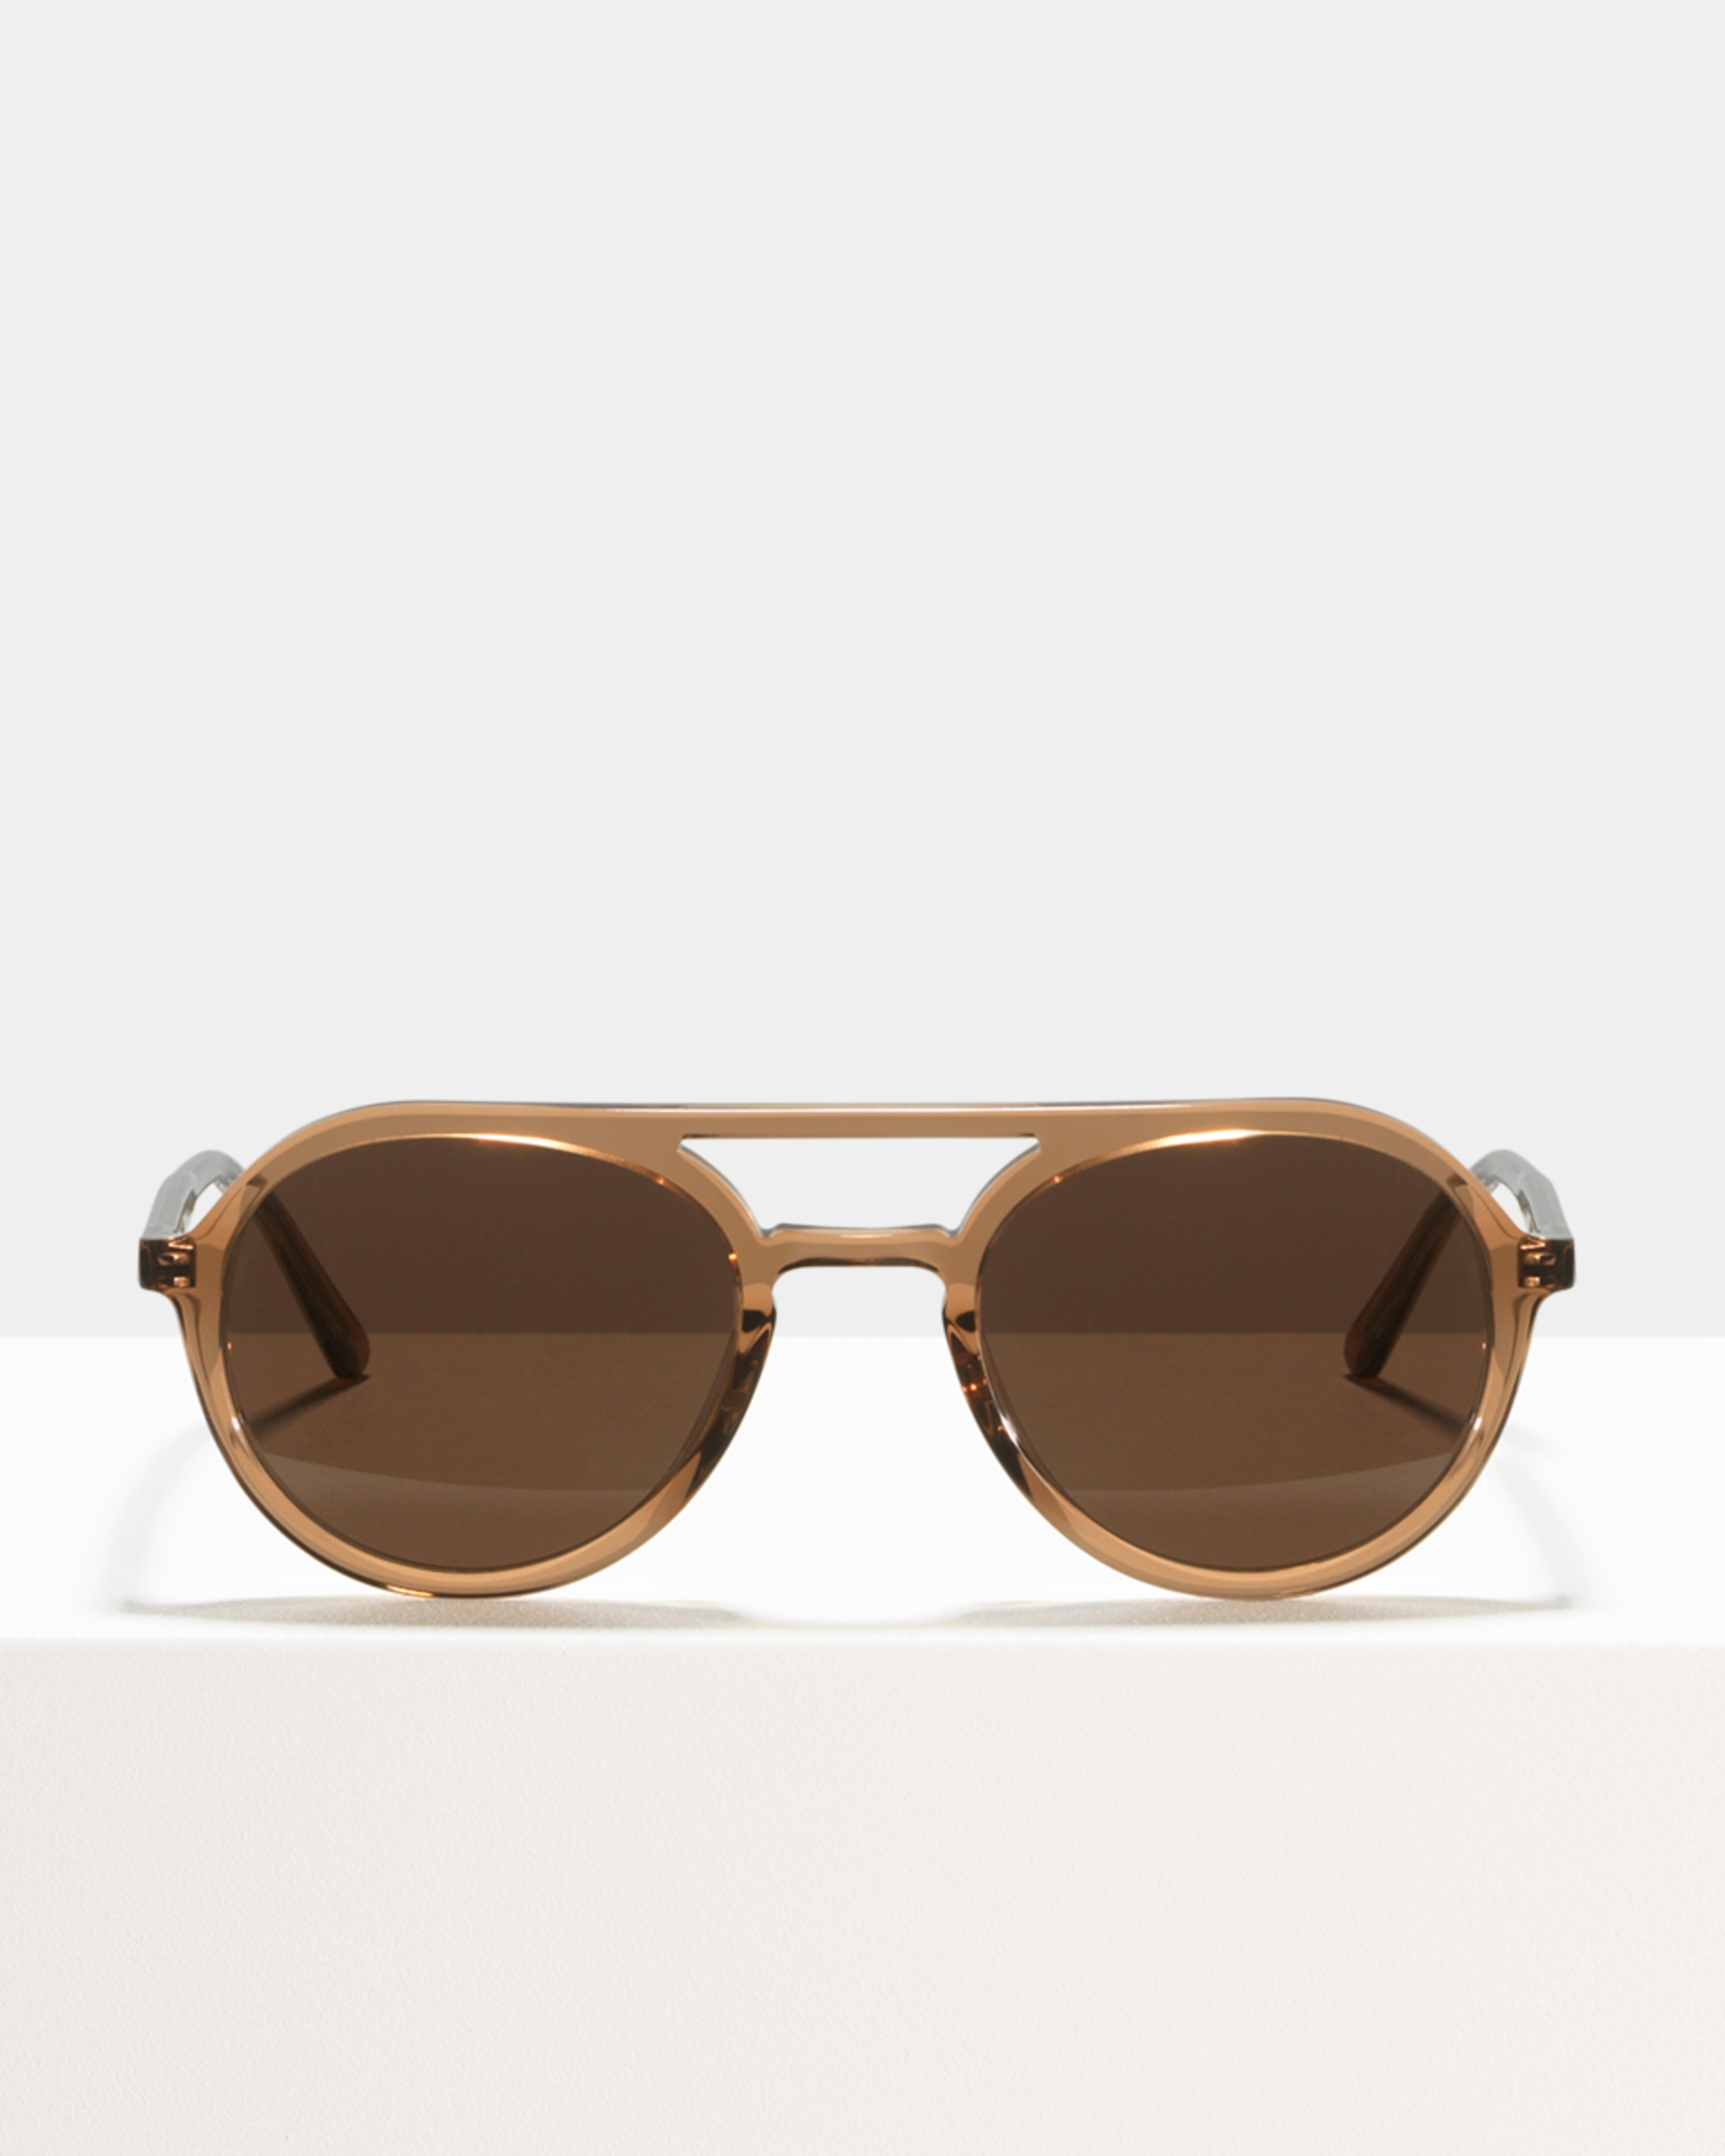 Ace & Tate Sunglasses |  acetate in Brown